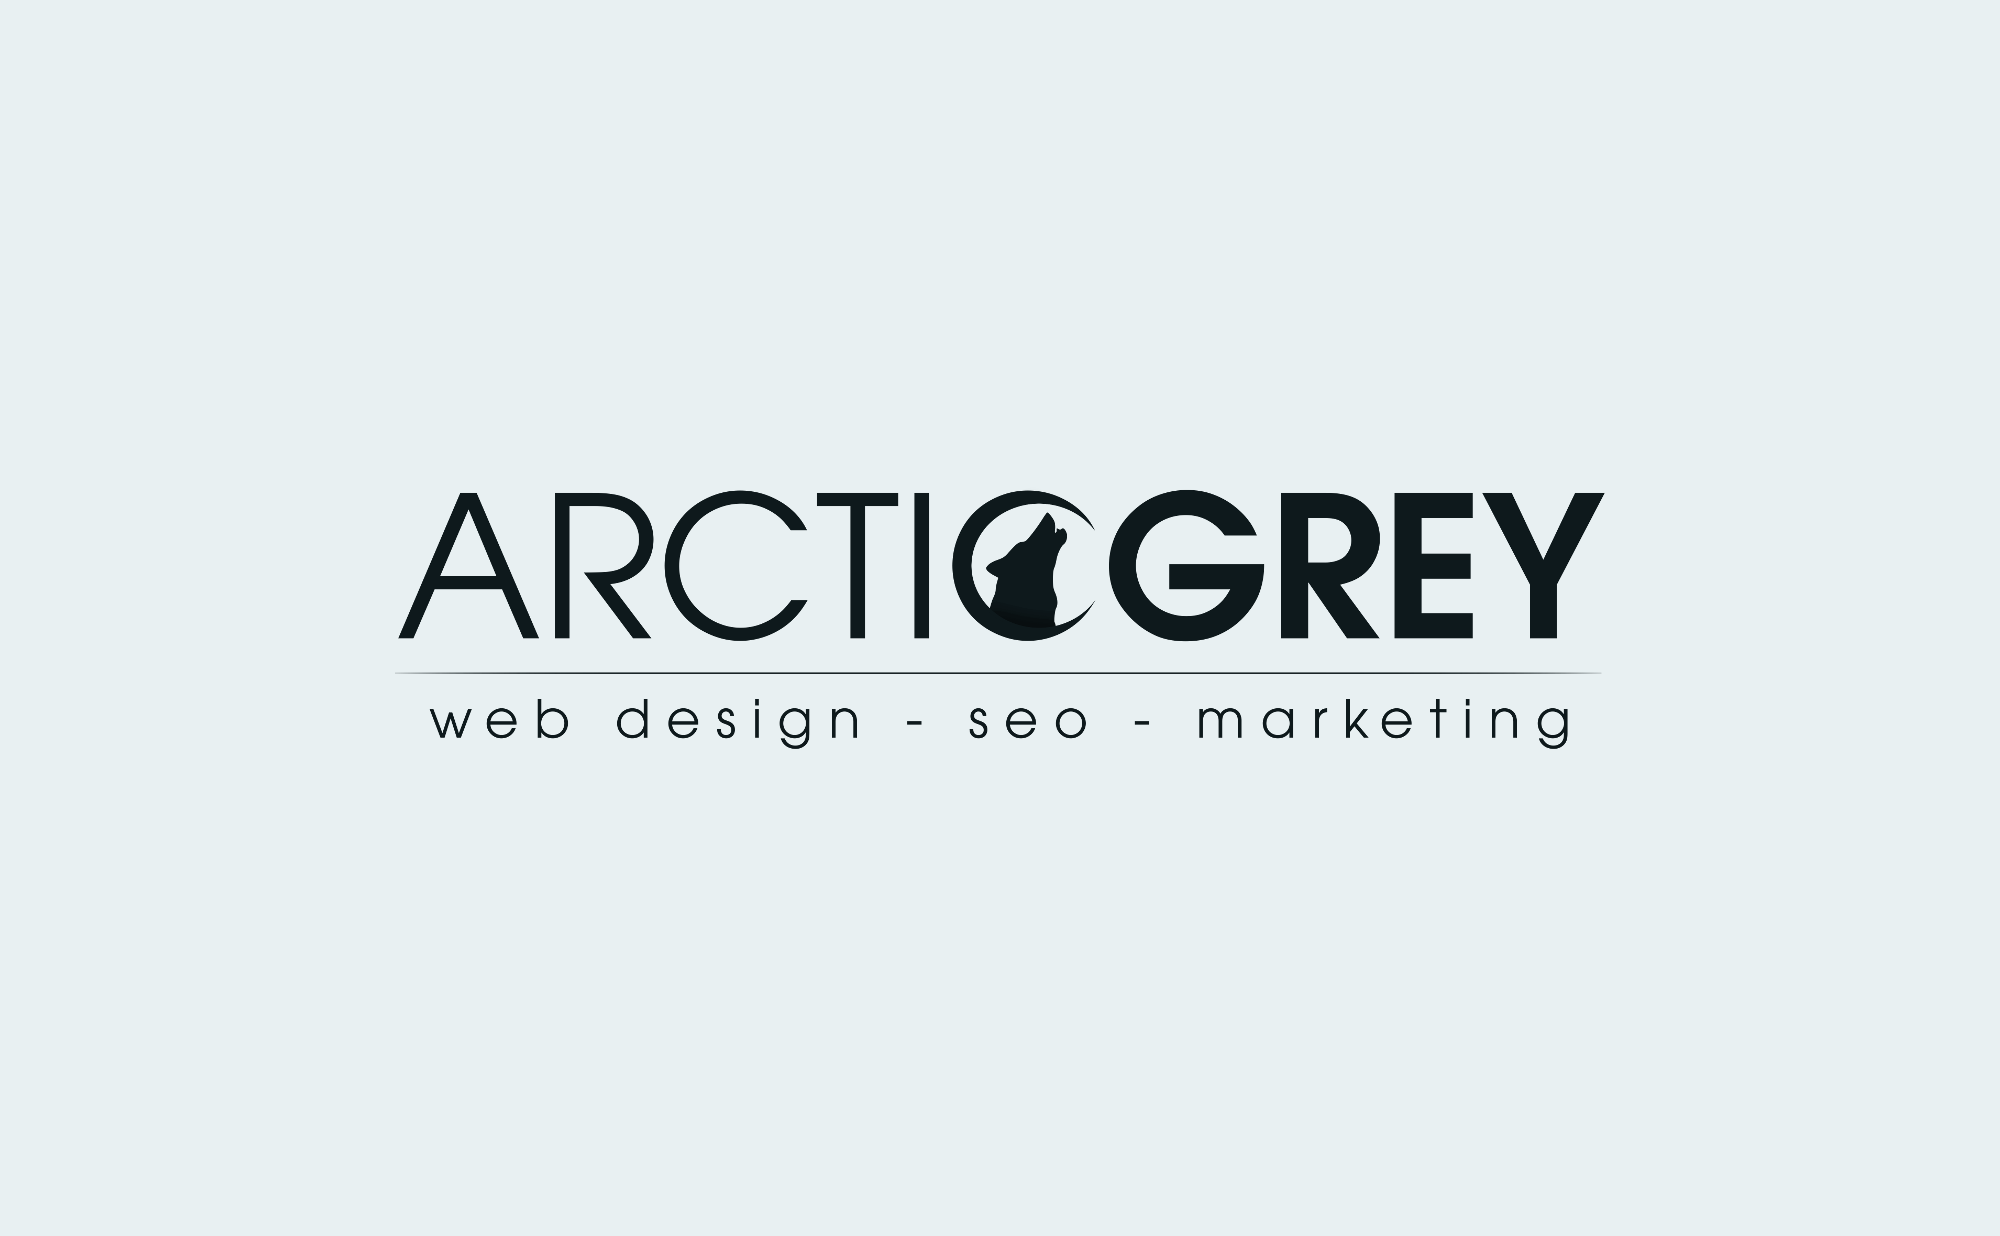 Best Shopify Development Company Logo: Arctic Grey Inc